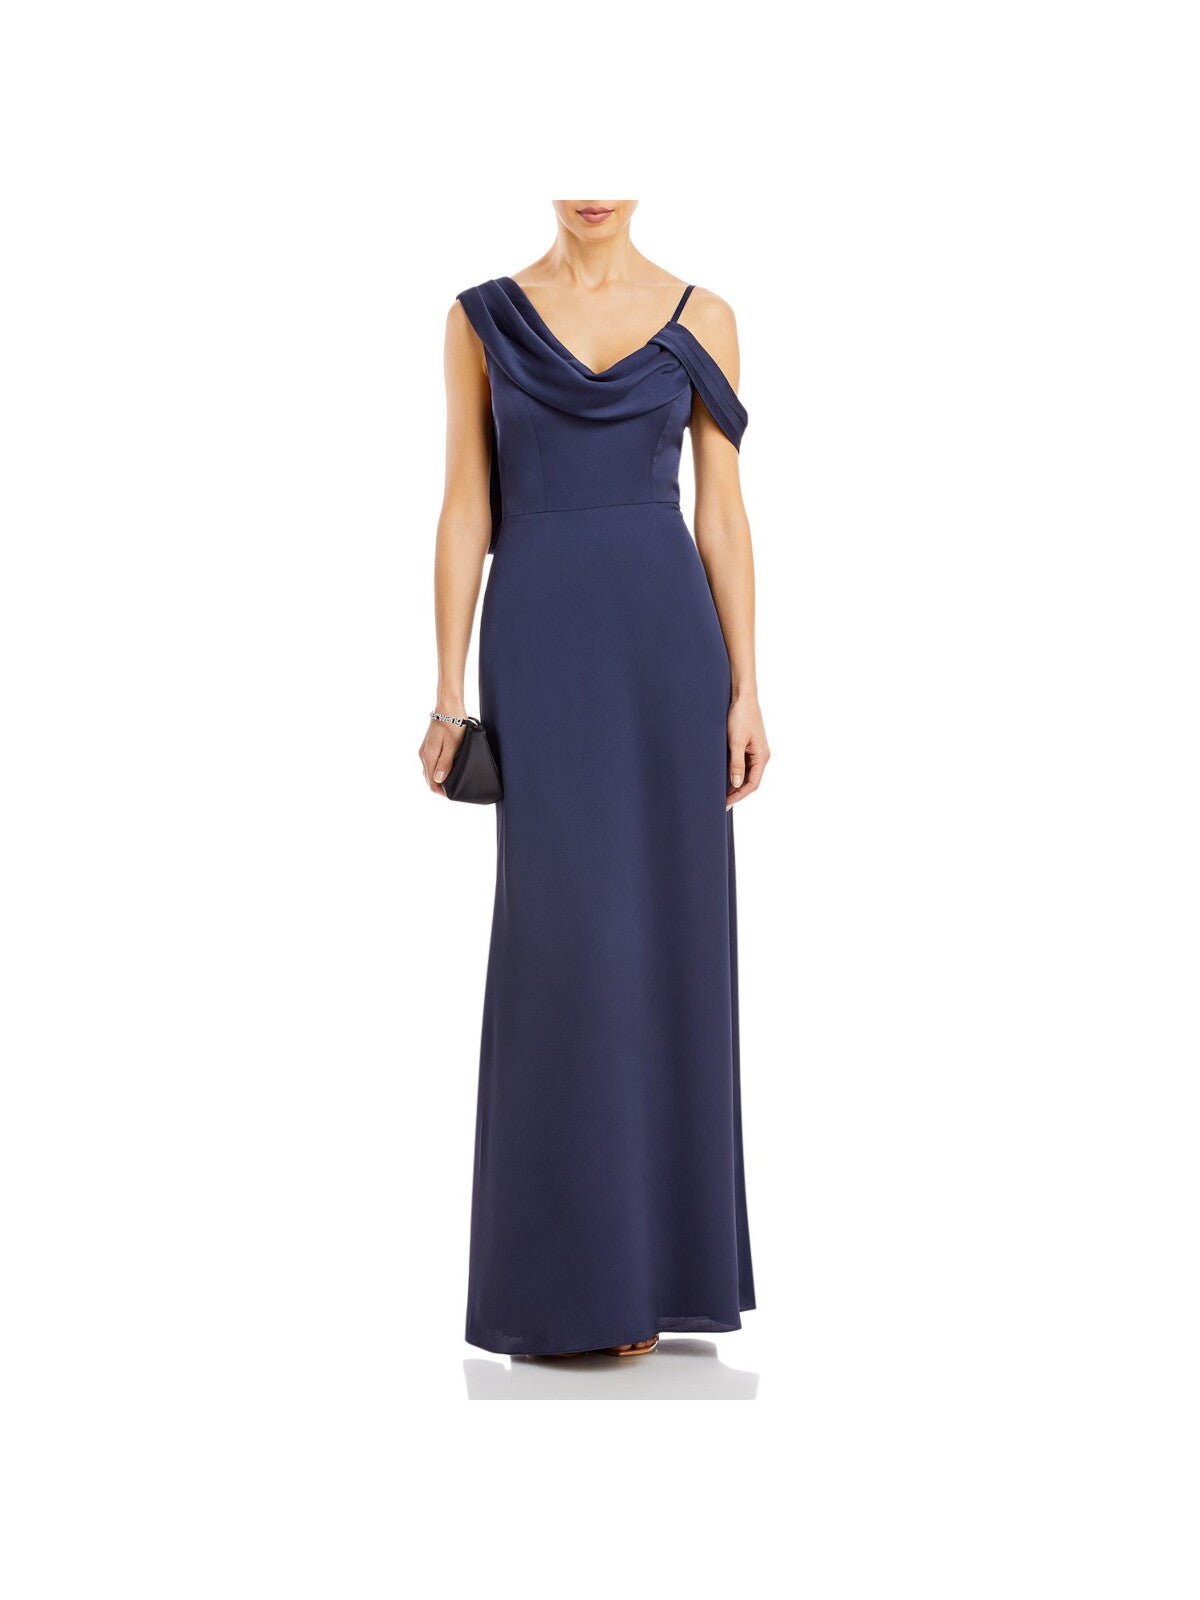 AQUA Womens Navy Zippered Adjustable Lined Sleeveless Asymmetrical Neckline Full-Length Evening Gown Dress 14